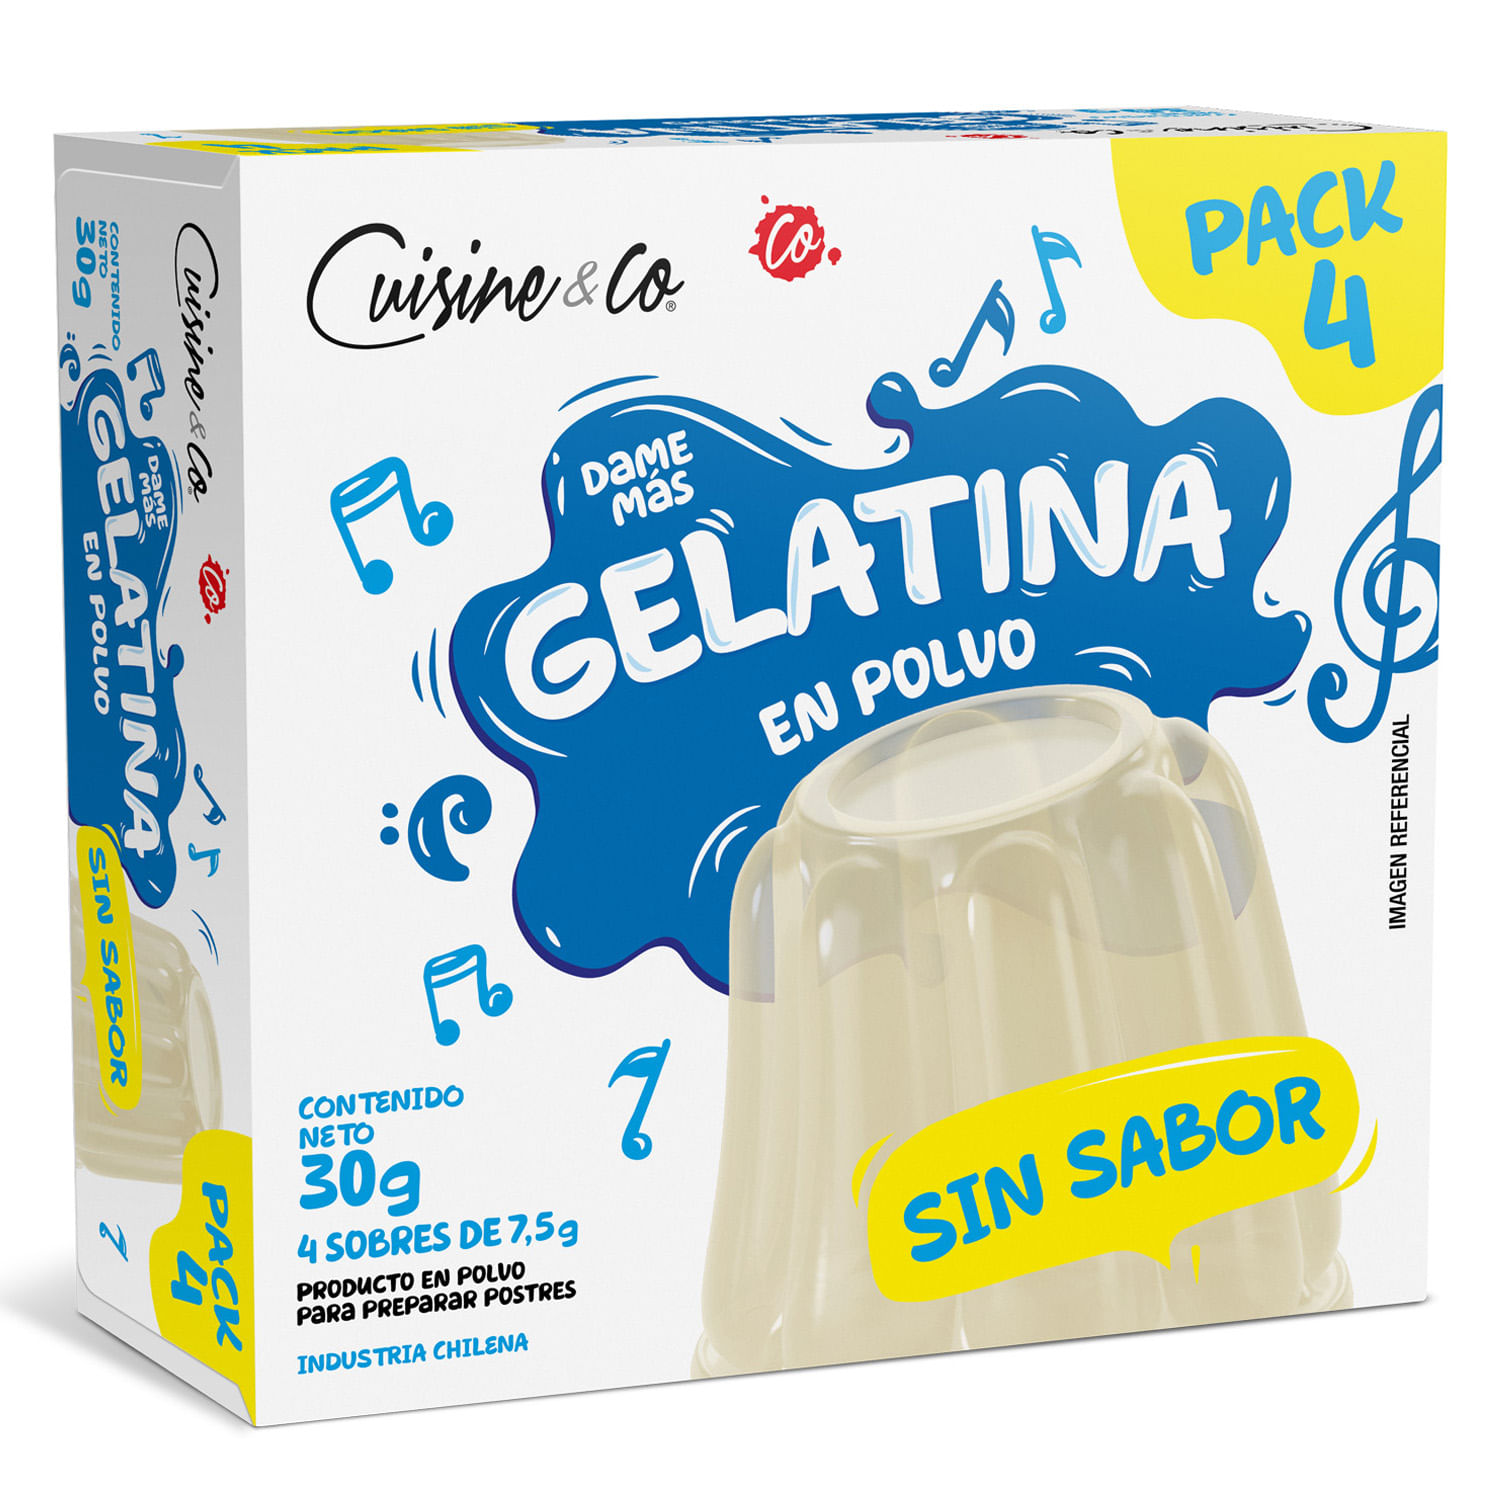 Jell-O Gelatina sin azúcar sabor lima (Paquete de 4)